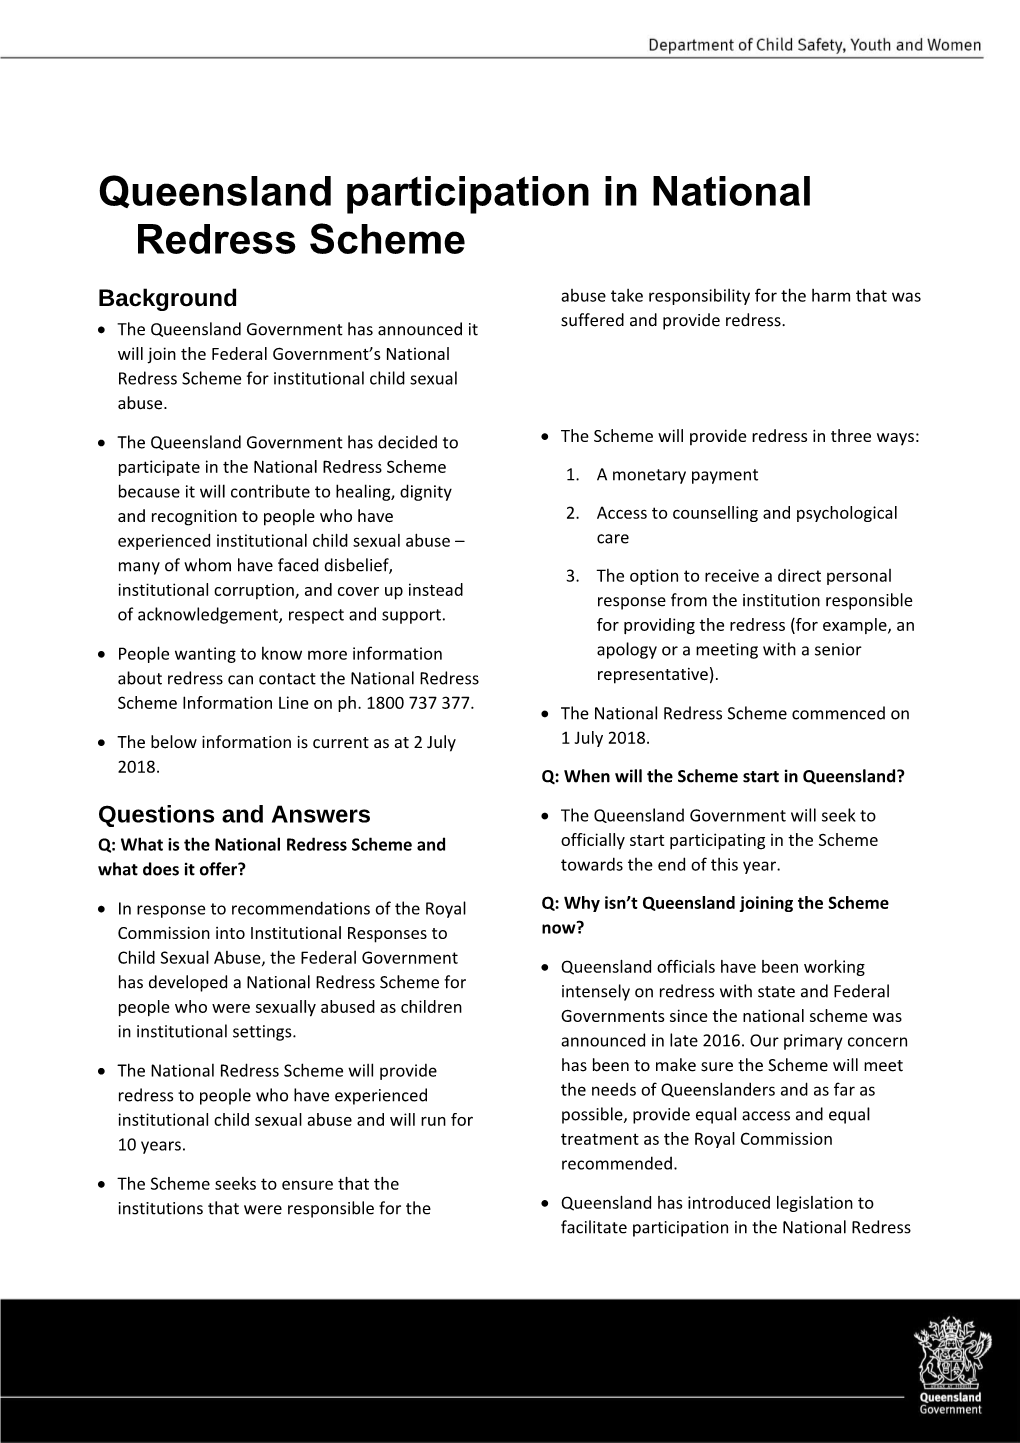 National Redress Scheme: Queensland's Participation - Q&As